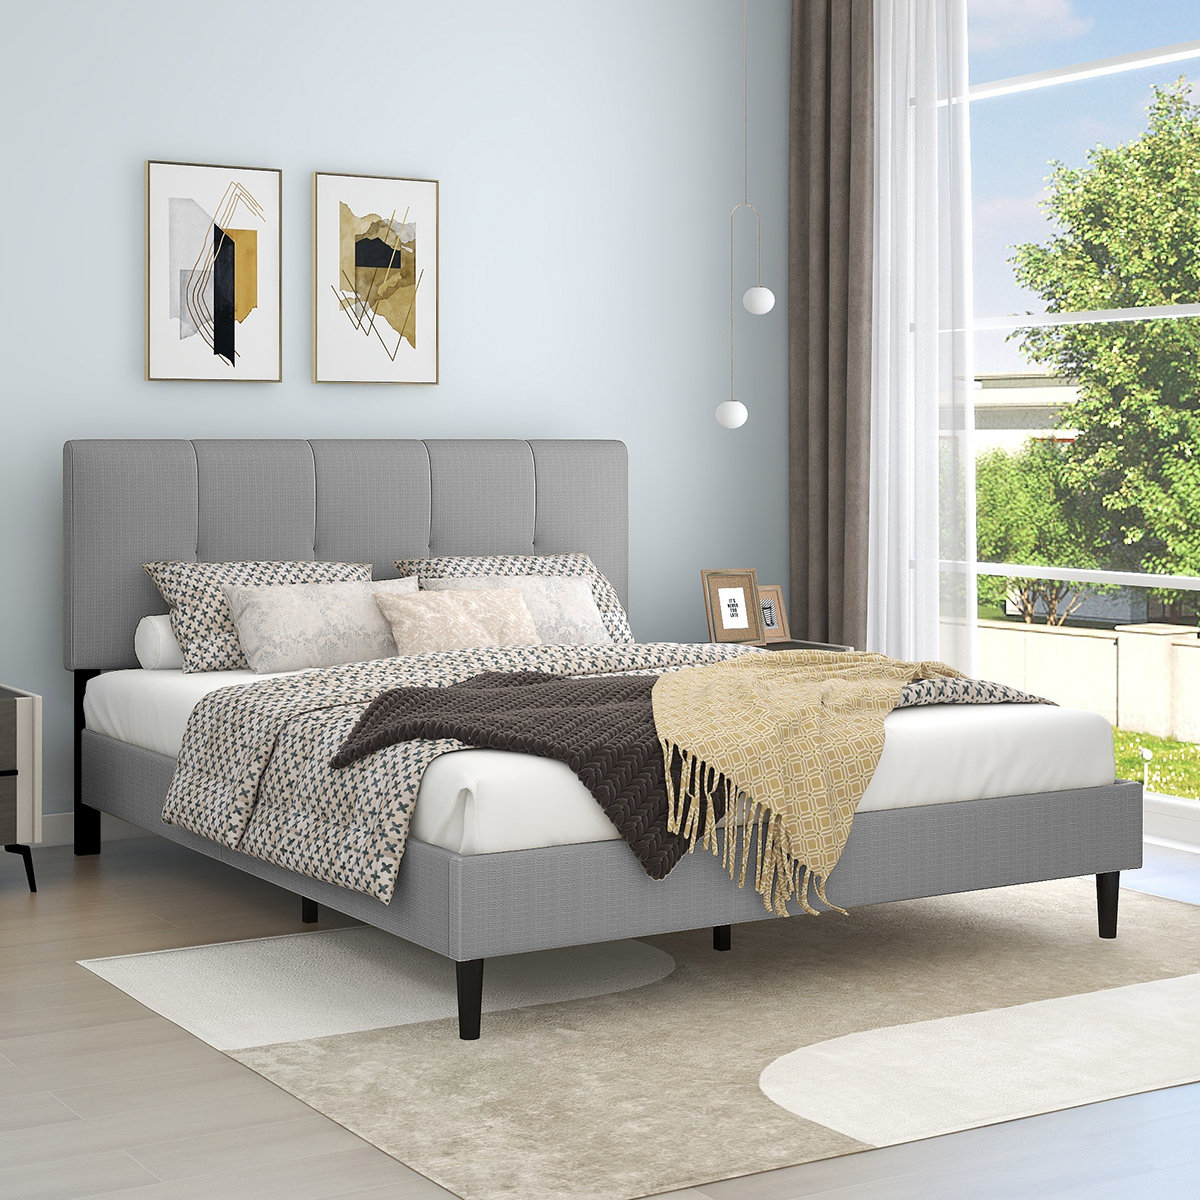 Dajai Low Profile Platform Bed Latitude Run Color: Light Gray, Size: Full